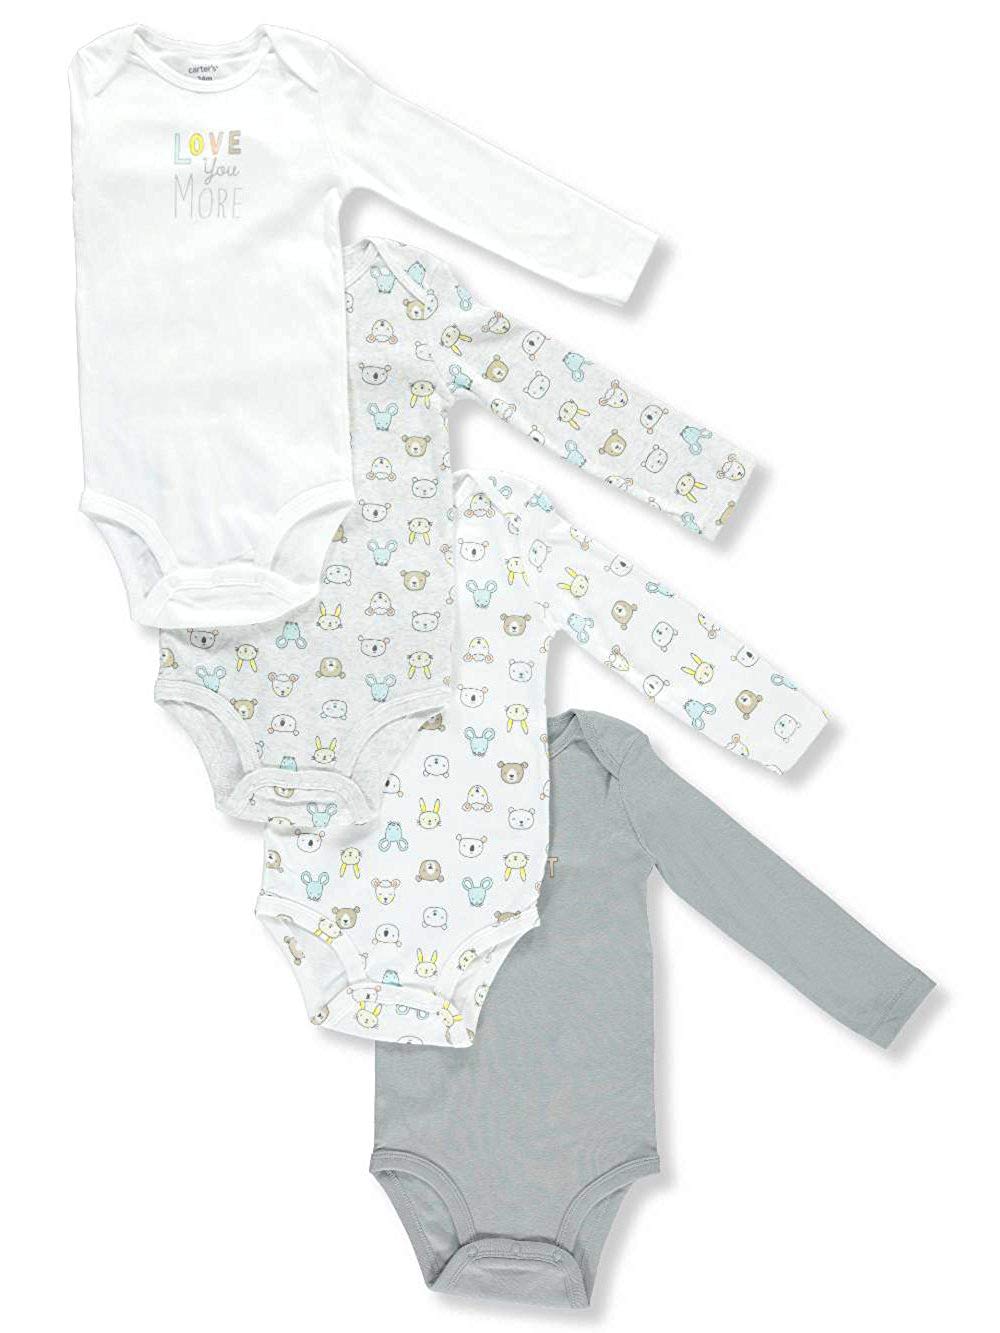 Carter's Baby Boys' 4Pack LongSleeve Original Bodysuits, Ivory/Grey, Size 12.0 eBay